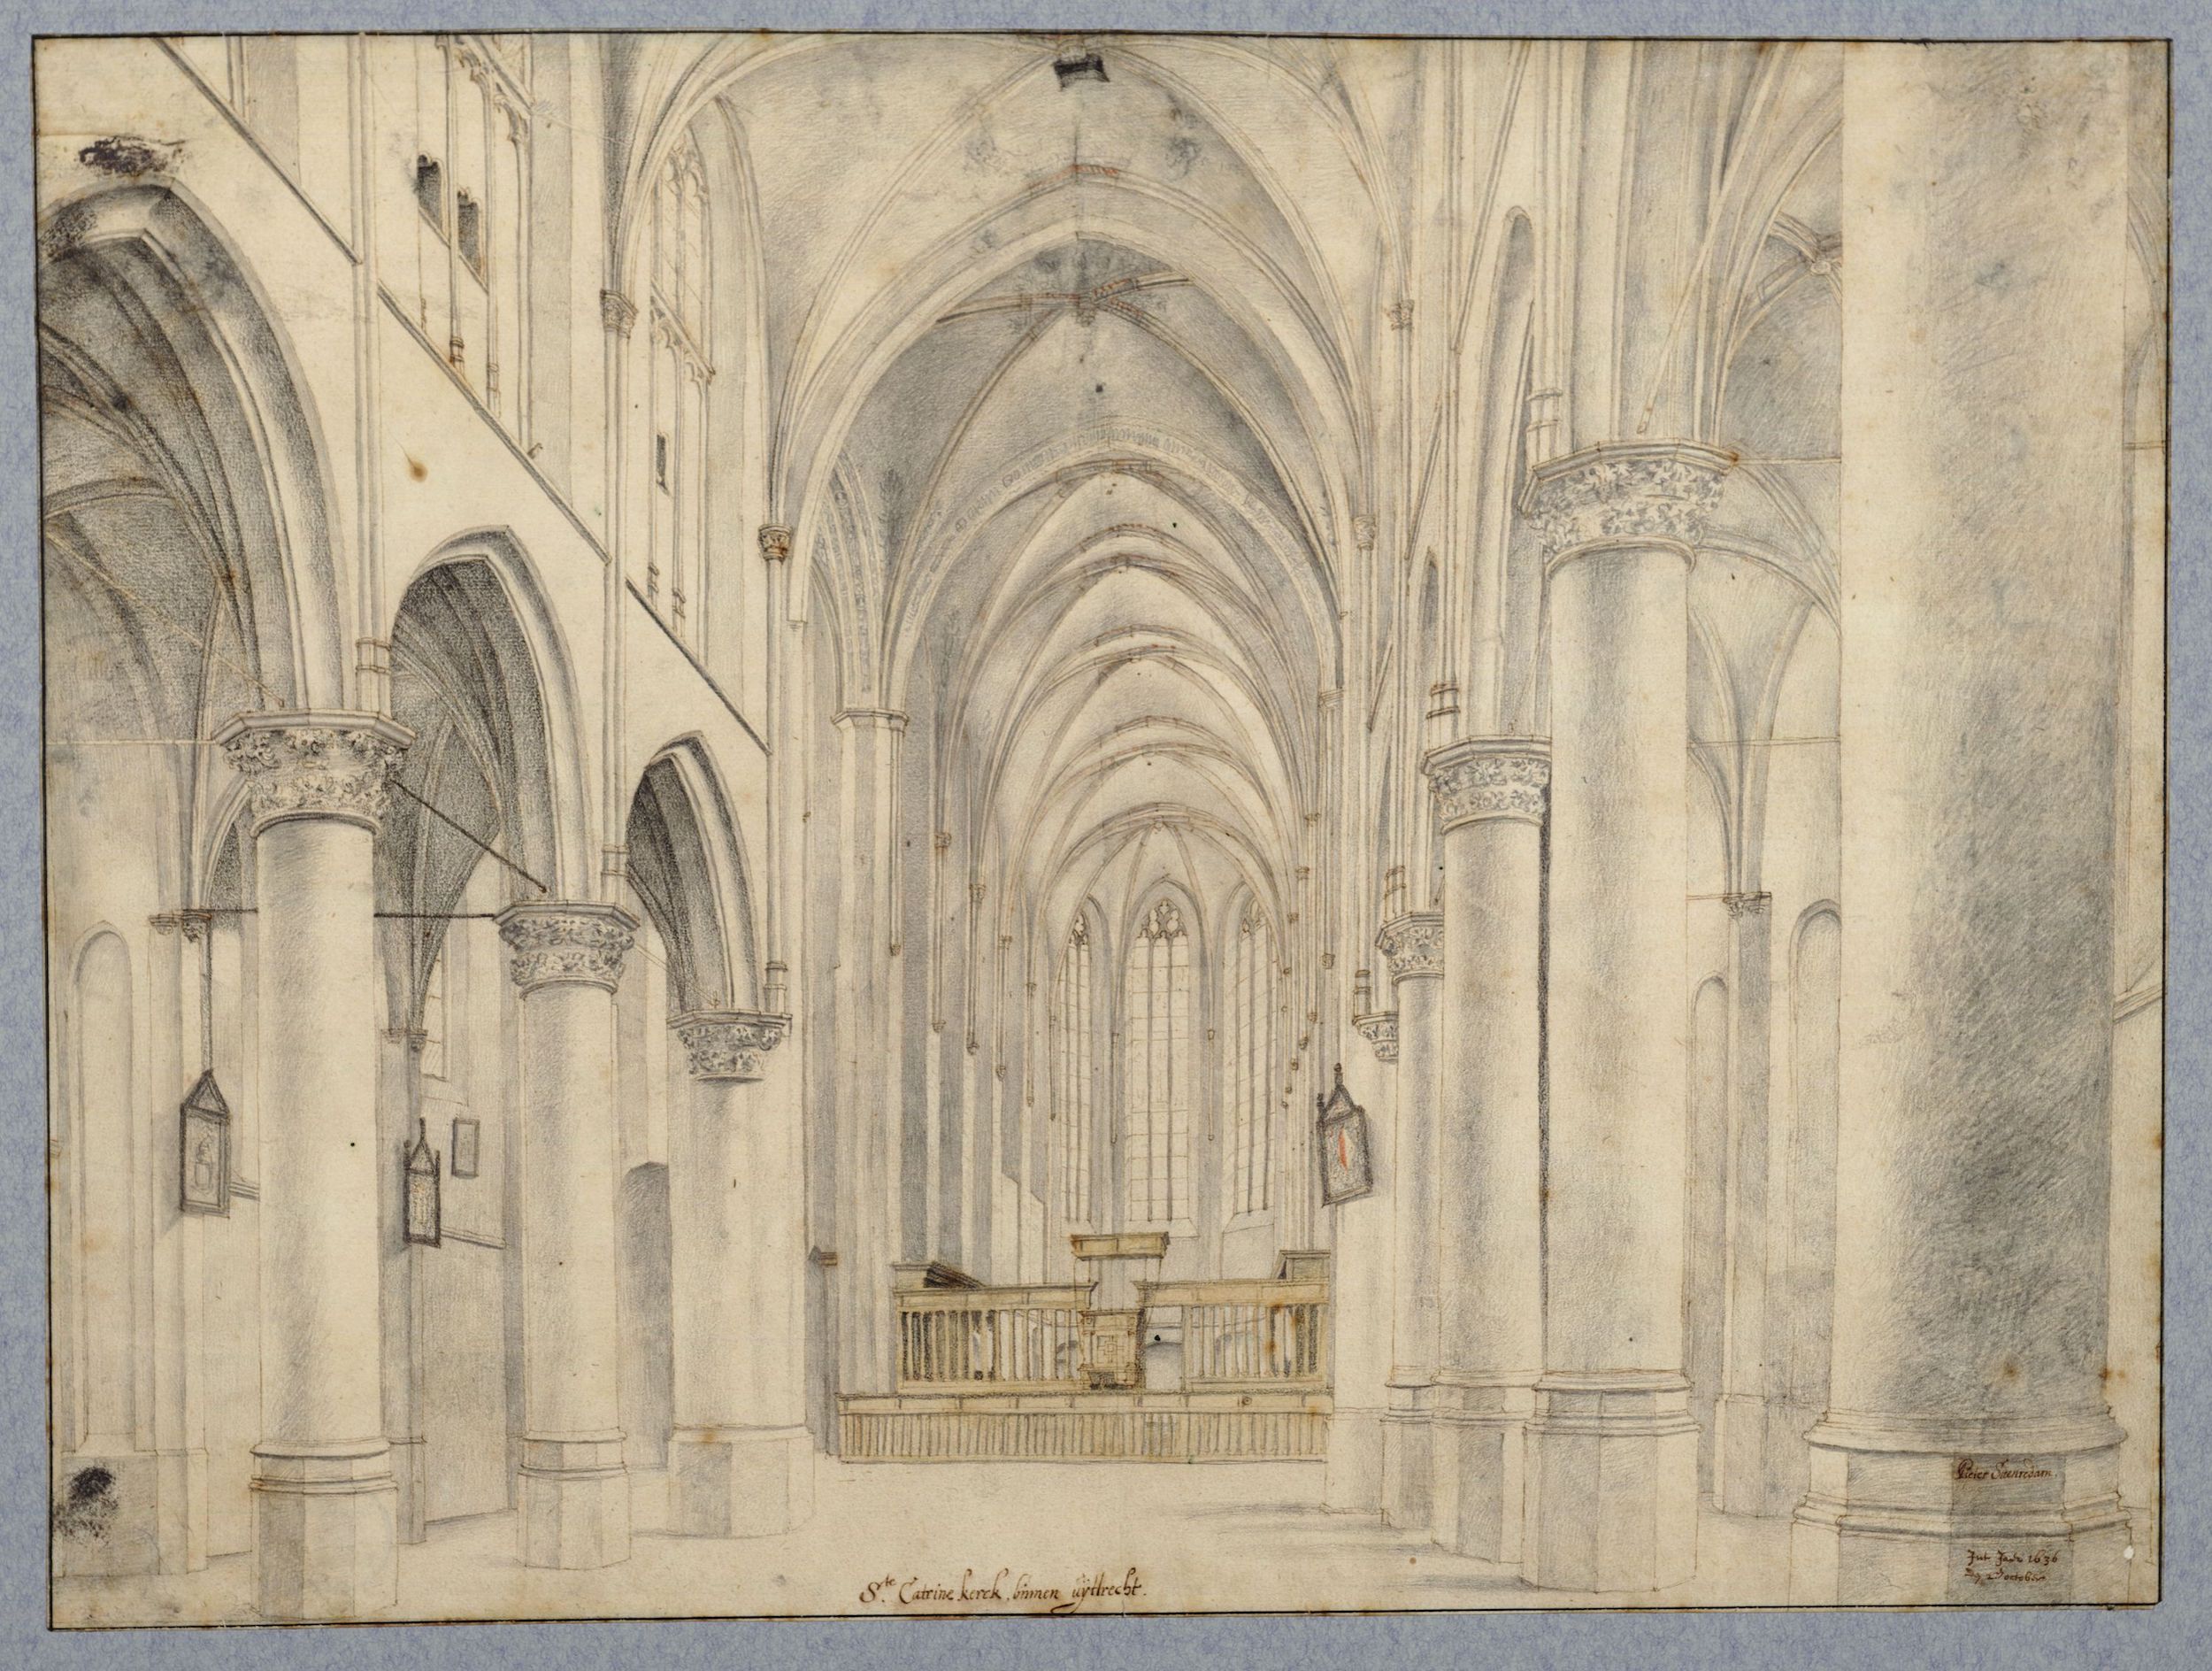 St Catharinakerk Pieter Saenredam 1636 Het Utrechts Archief